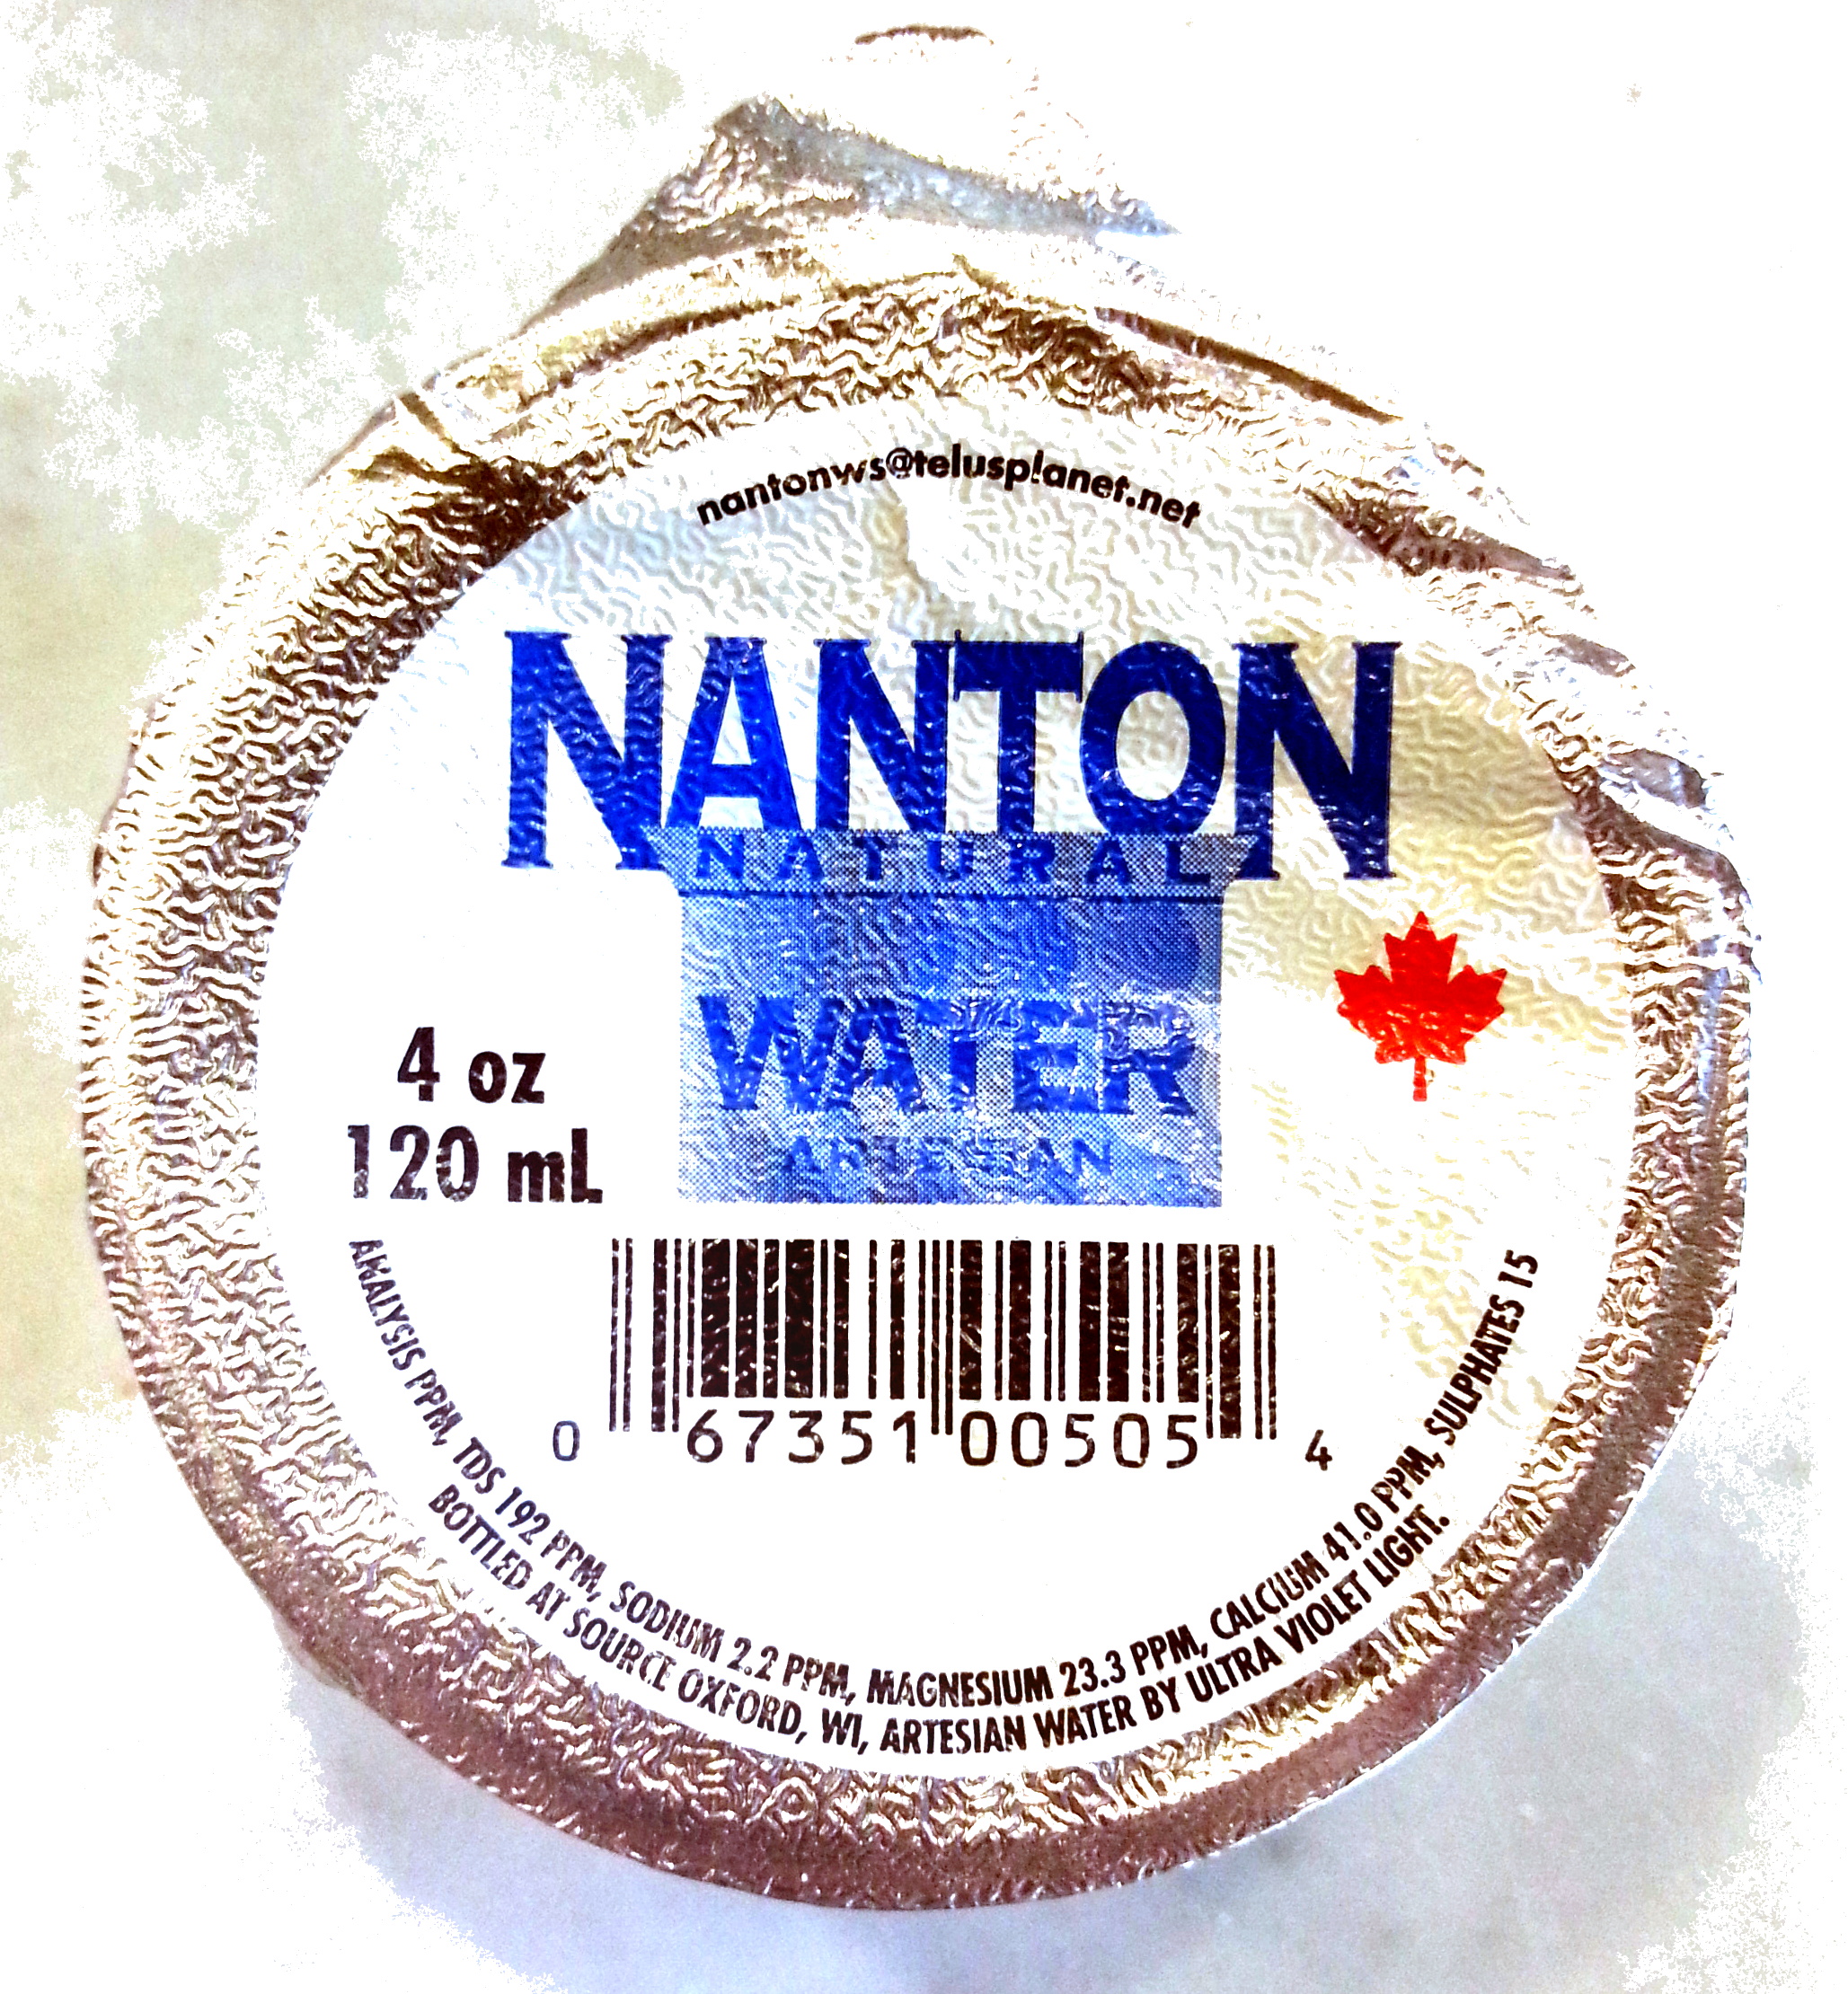 Nanton Natural Water Artesian - Produit